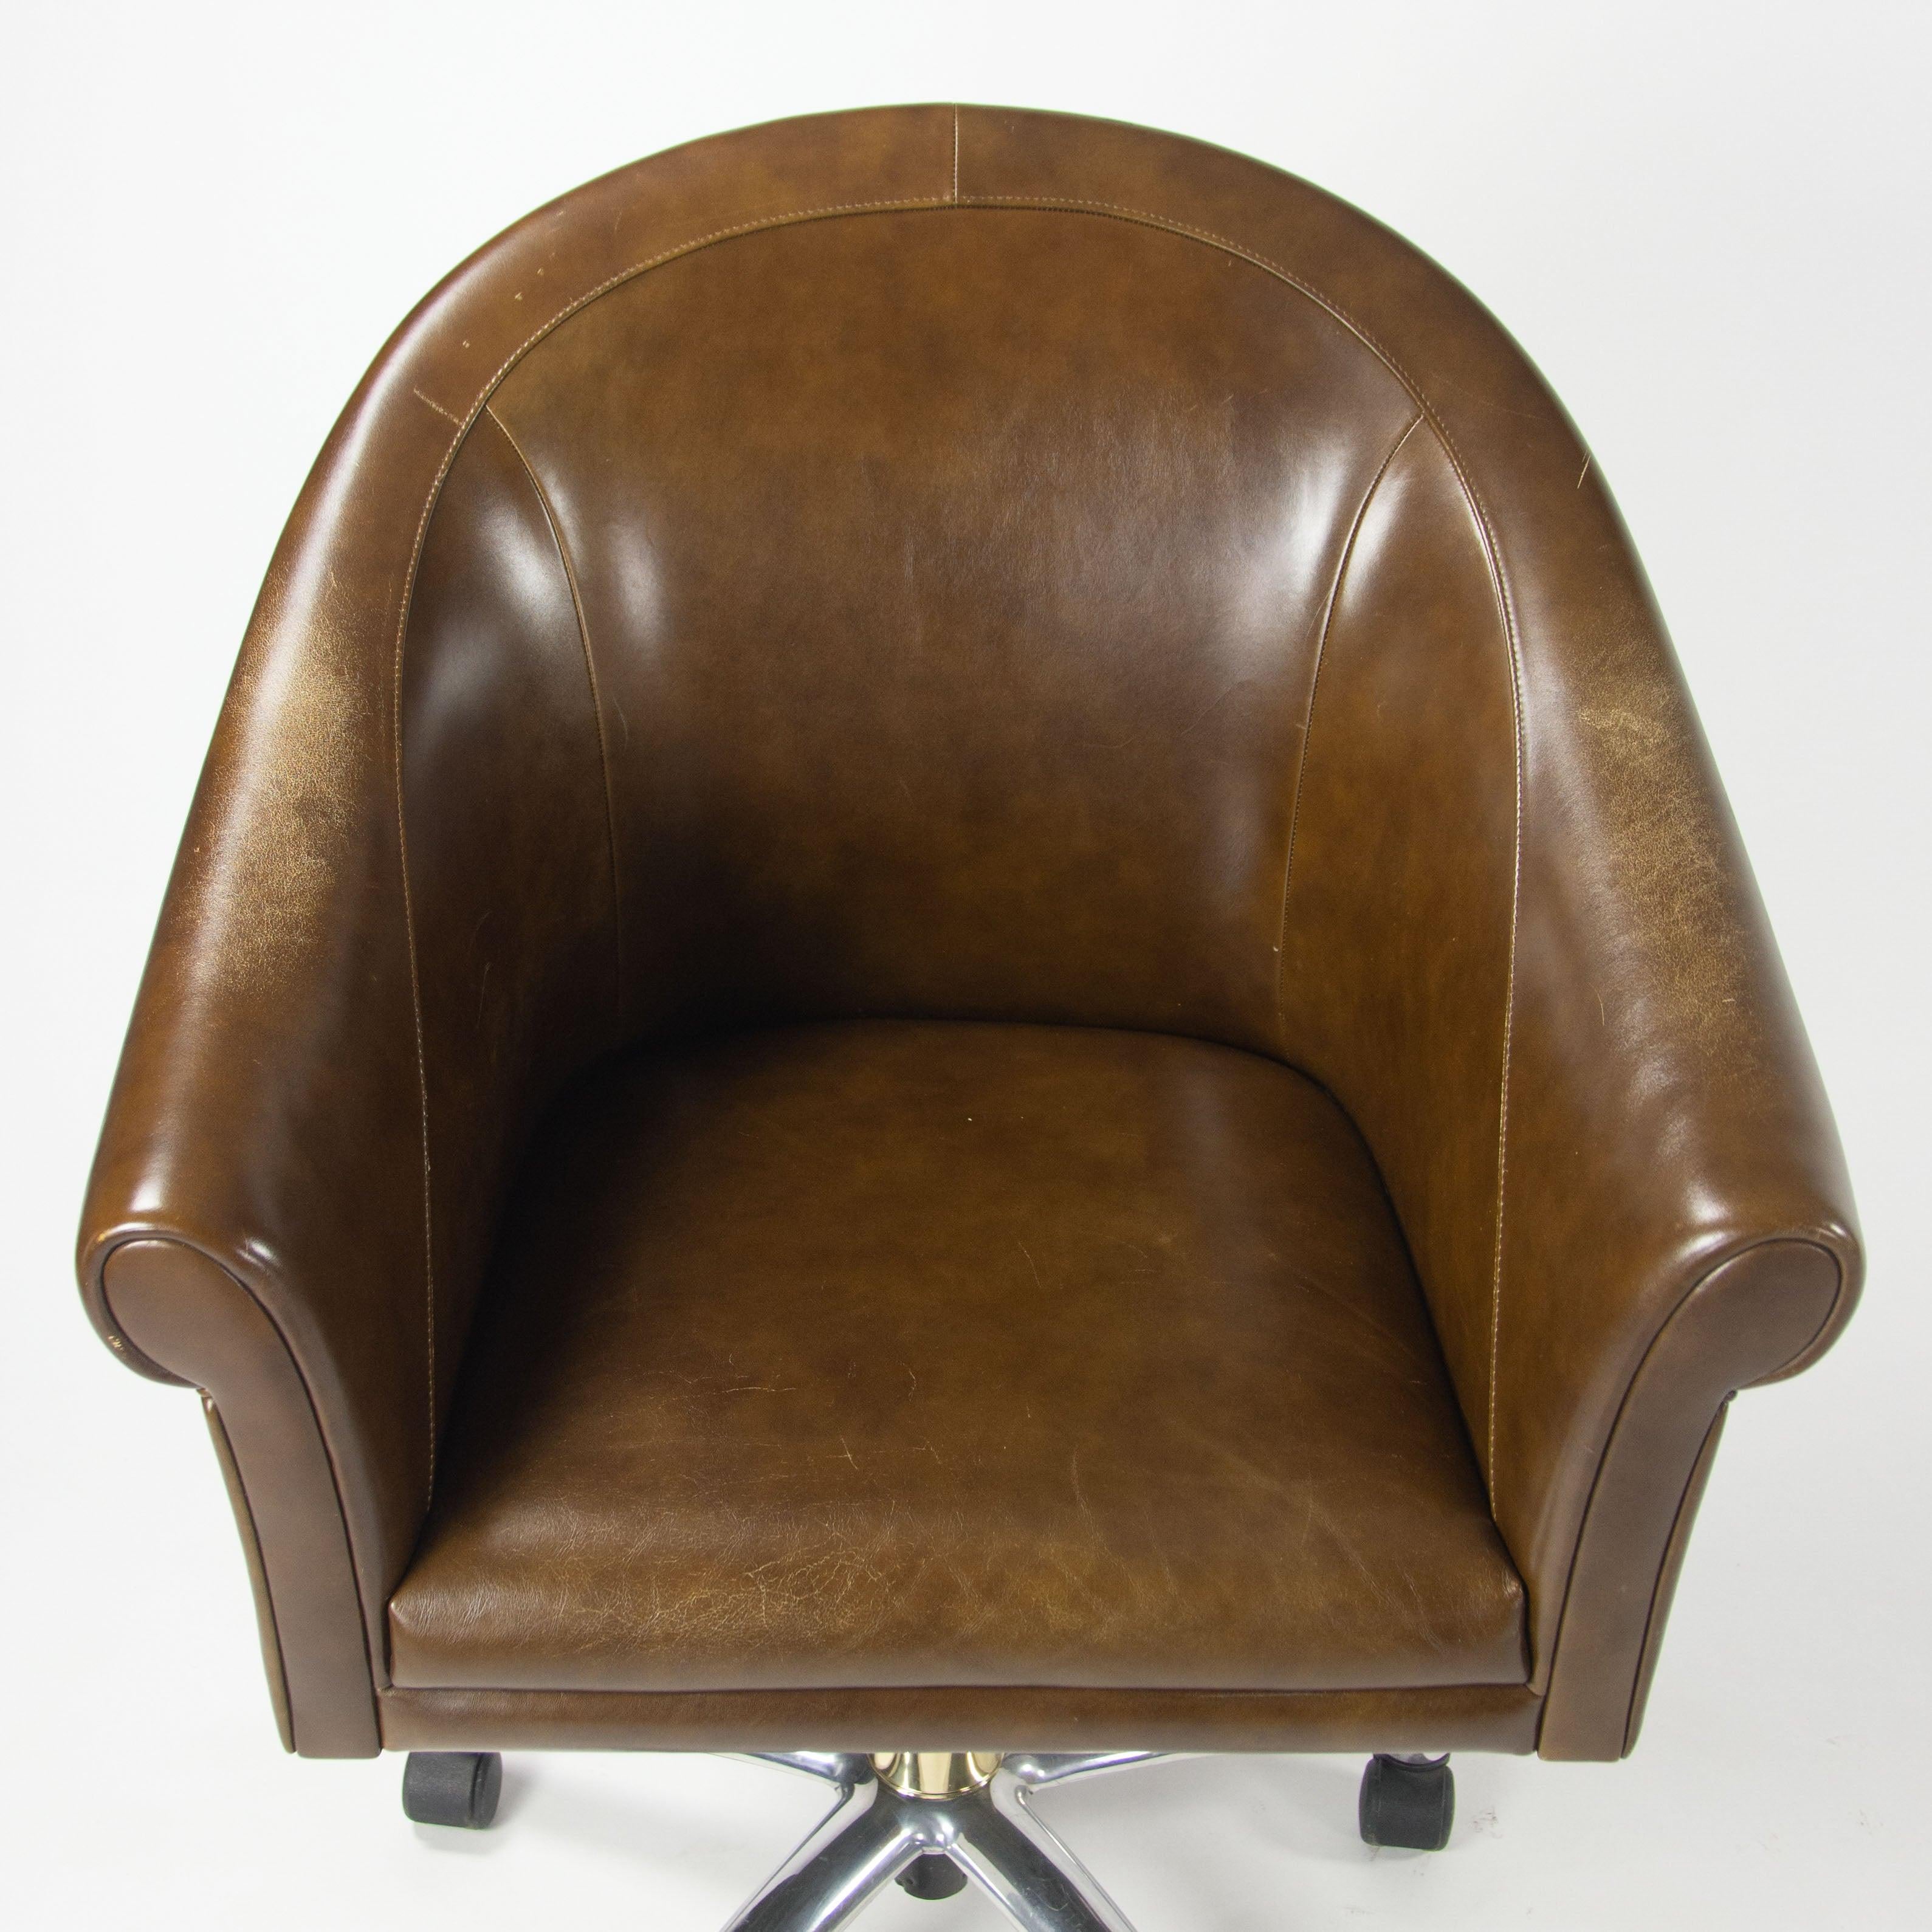 Poltrona Frau Brown Leather Luca Scacchetti Sinan Office Desk Chair en vente 3